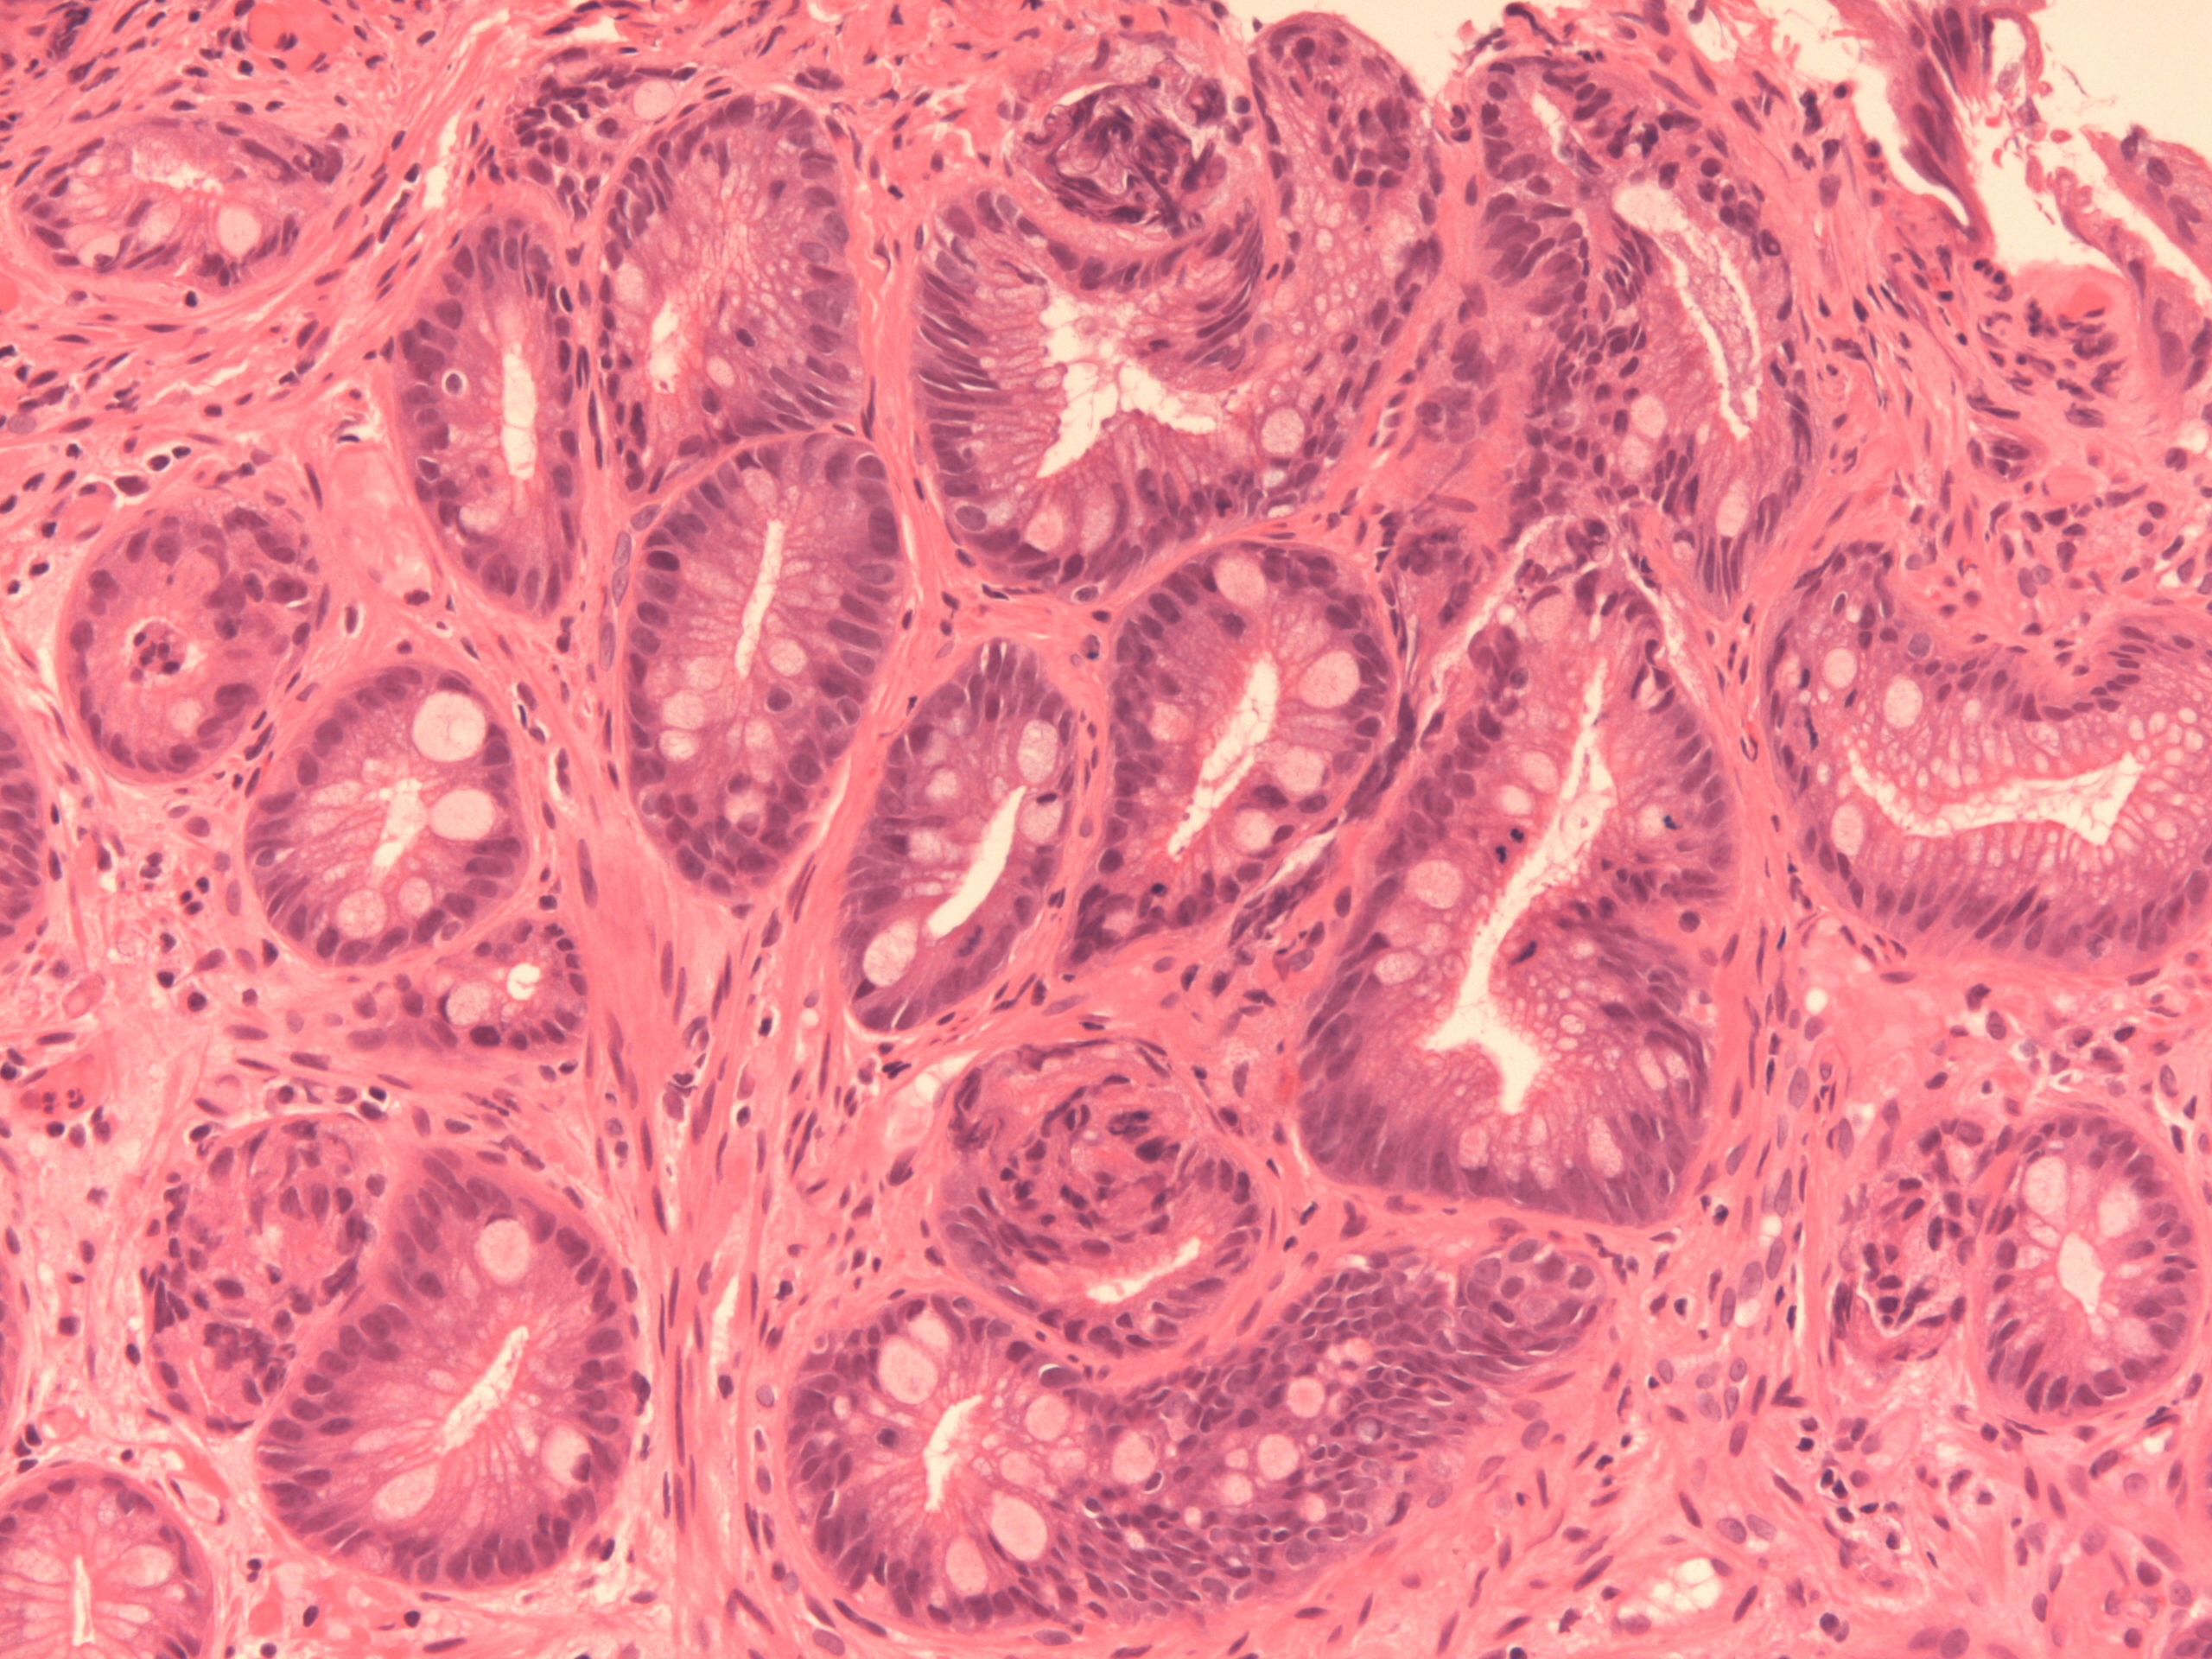 Microscopic image of Barrett's oesophagus